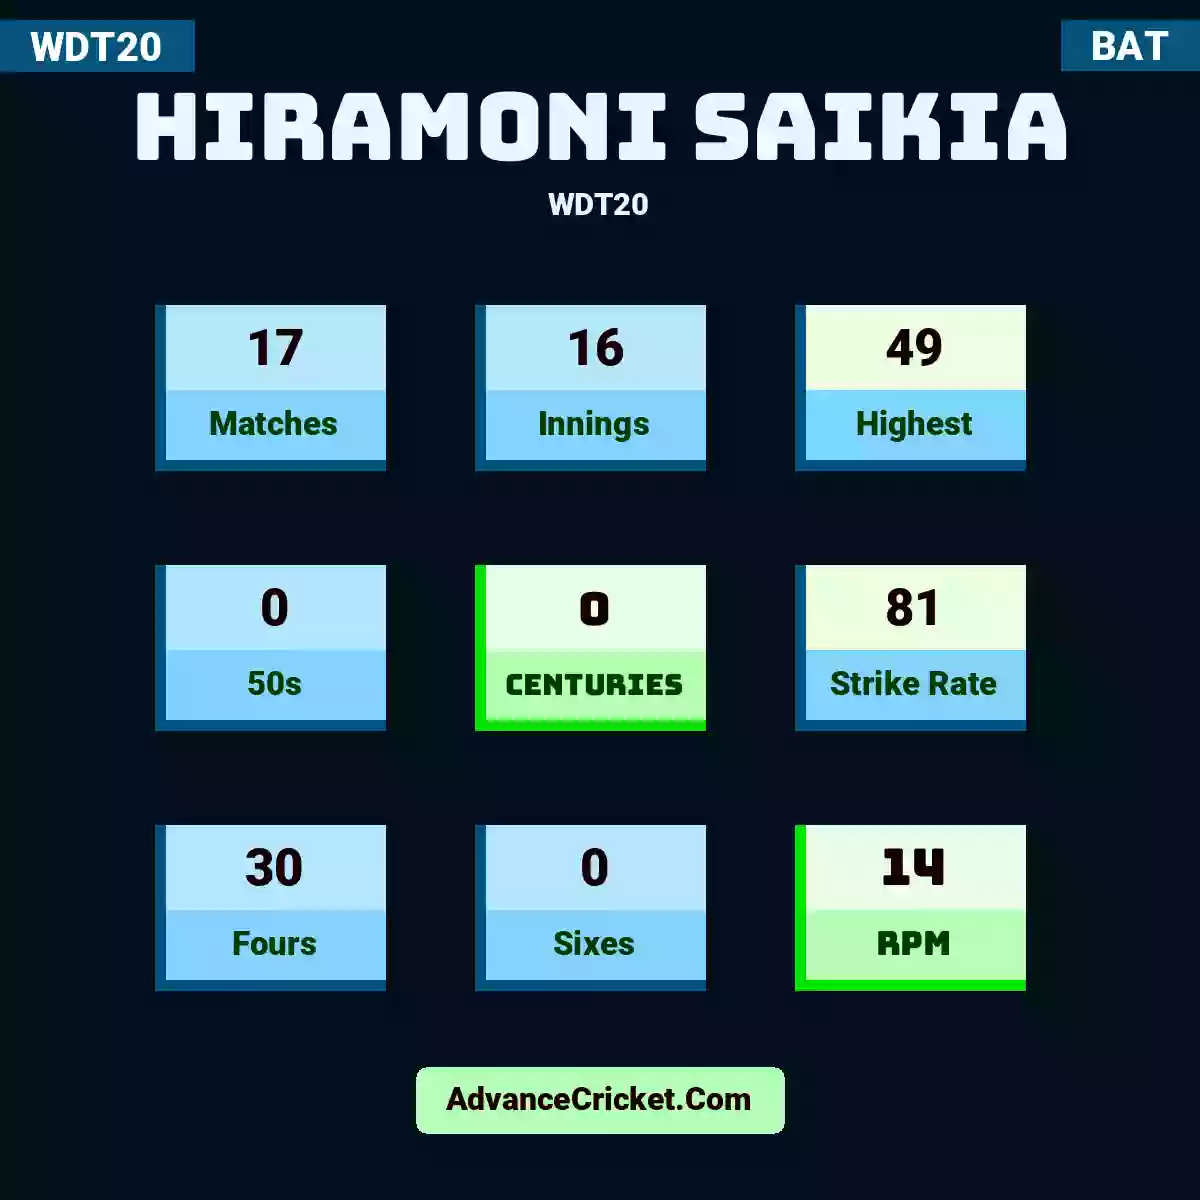 Hiramoni Saikia WDT20 , Hiramoni Saikia played 17 matches, scored 49 runs as highest, 0 half-centuries, and 0 centuries, with a strike rate of 81. h.saikia hit 30 fours and 0 sixes, with an RPM of 14.